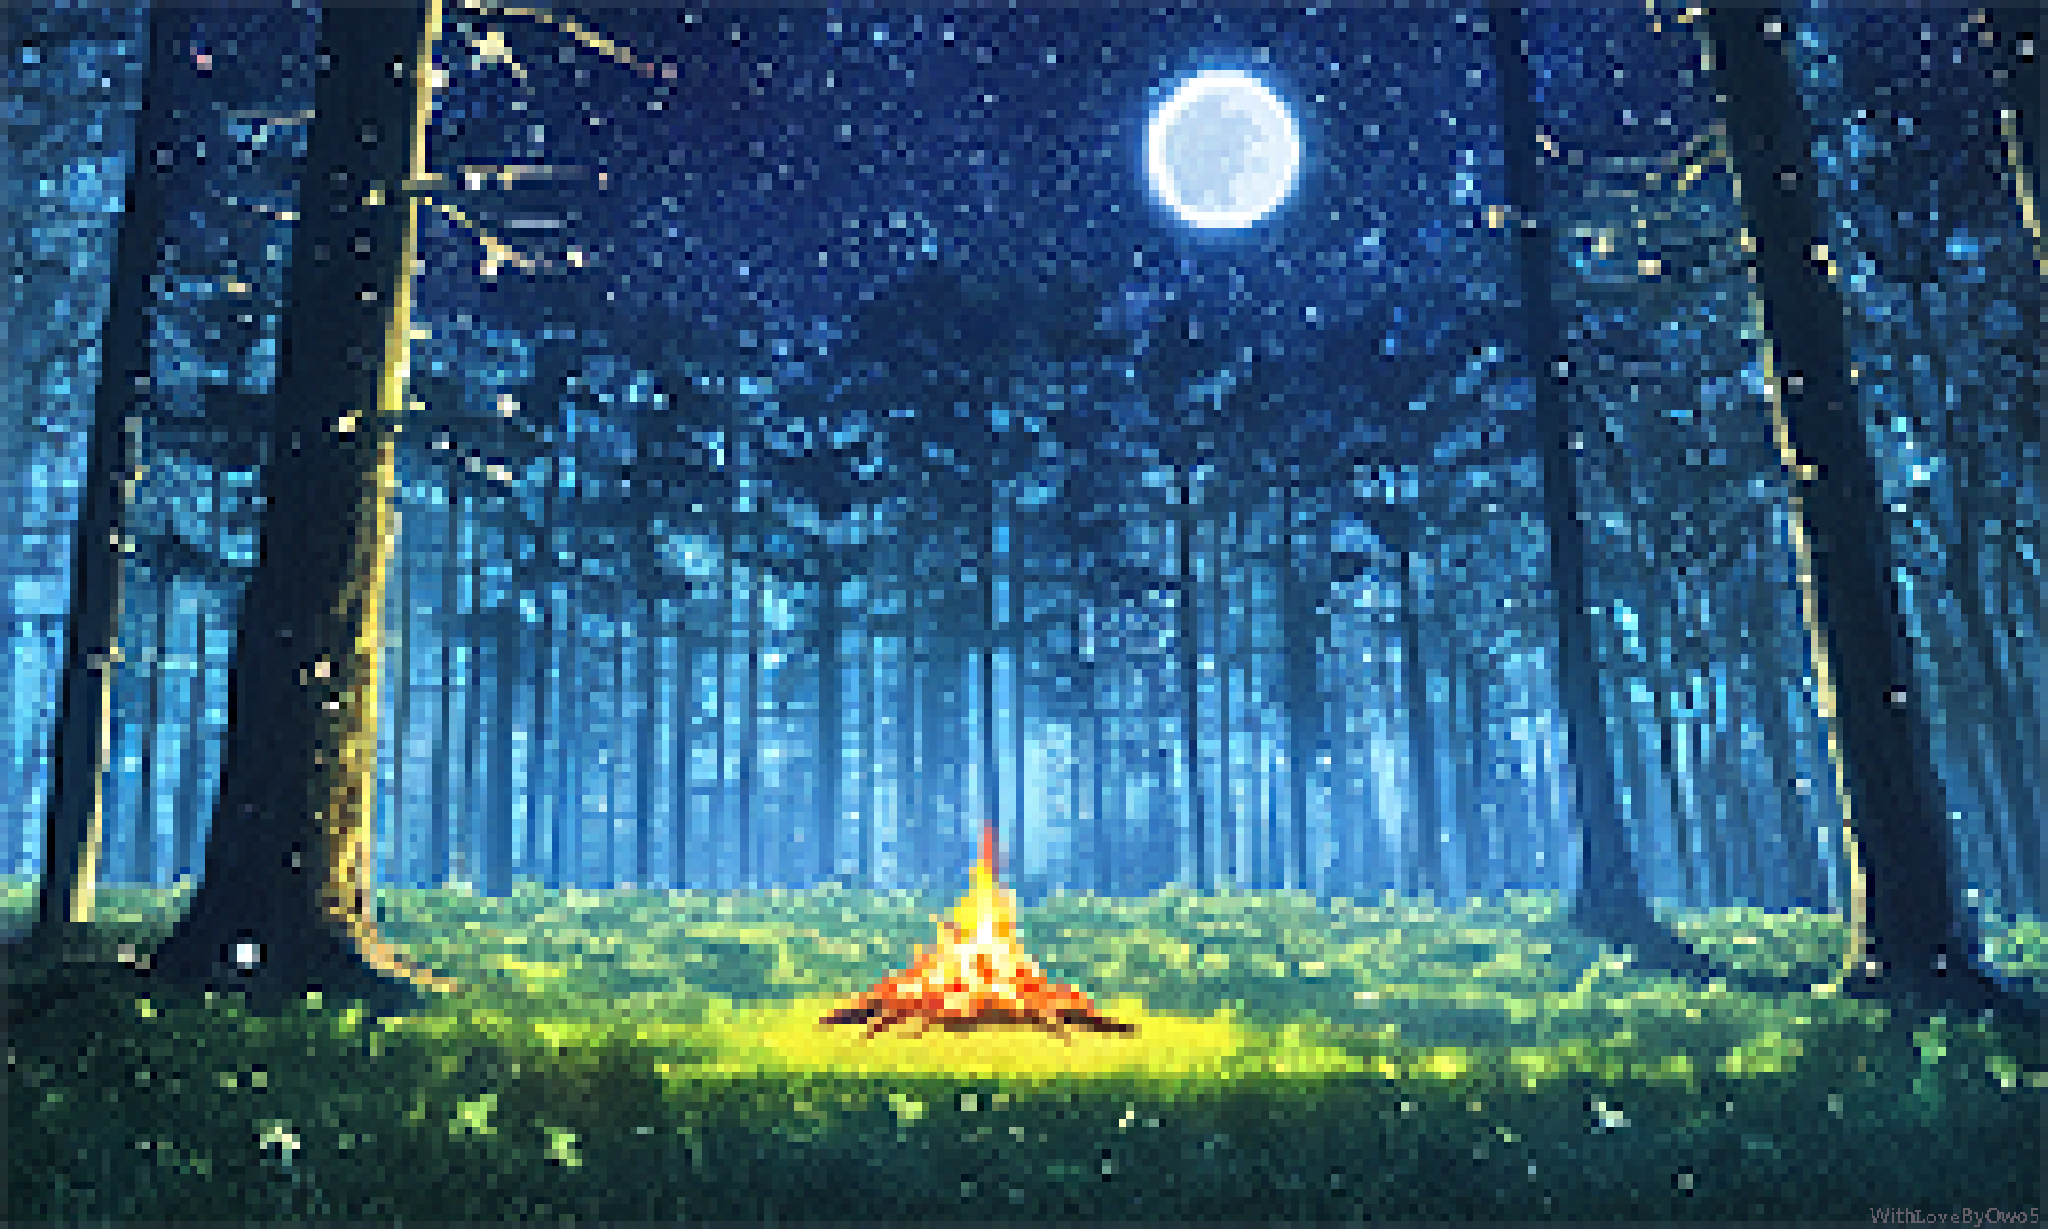 General 2048x1229 forest night Moon trees pixel art fire watermarked digital art